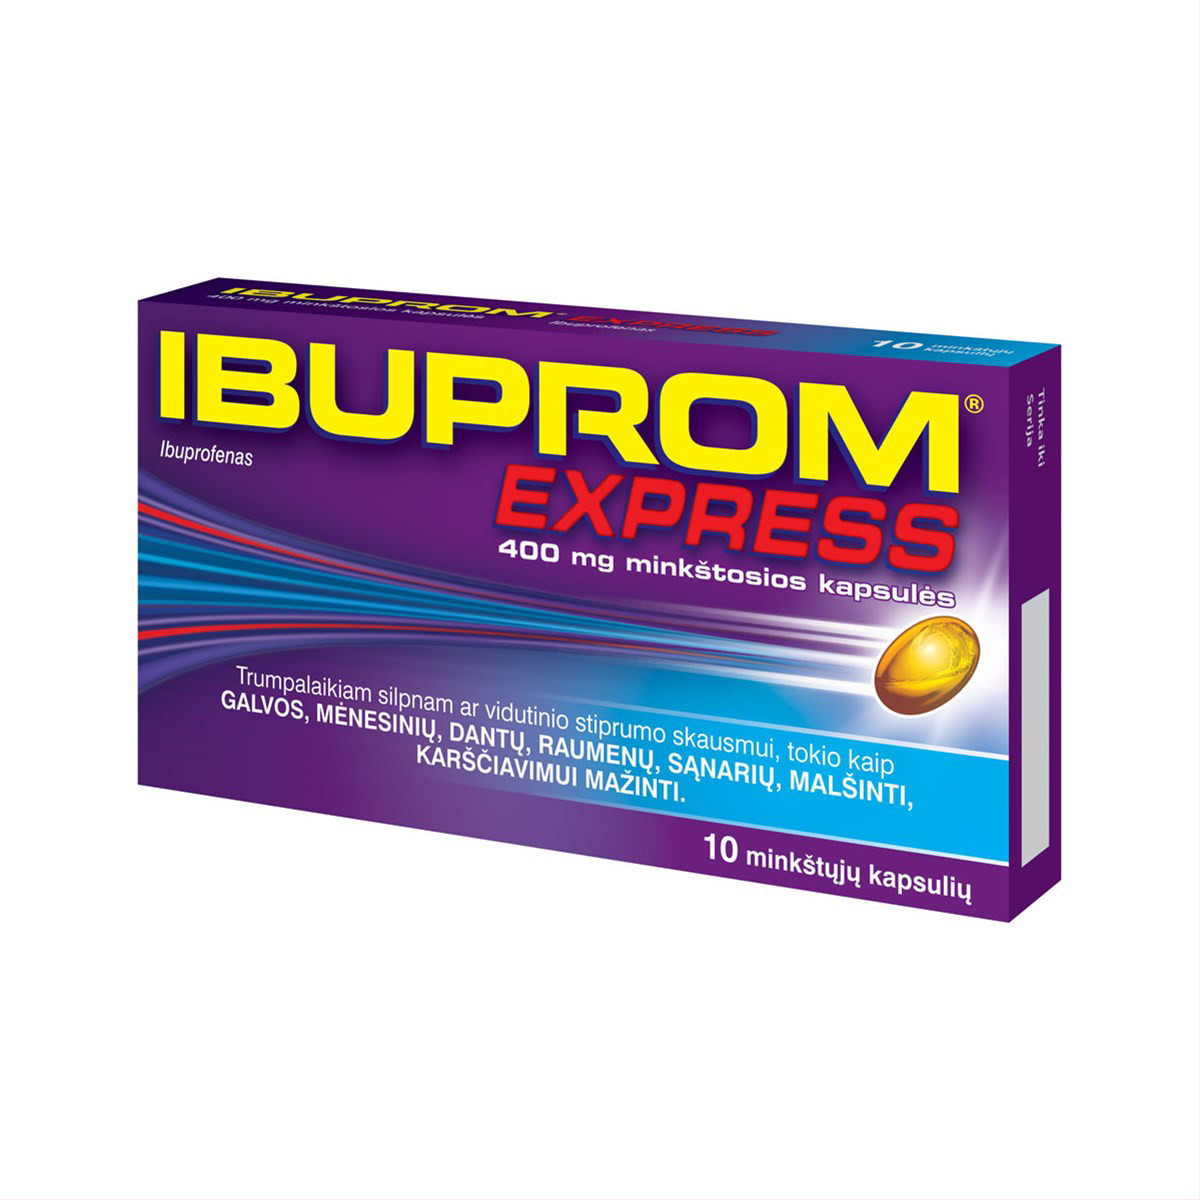 IBUPROM EXPRESS, 400 mg, minkštosios kapsulės, N10